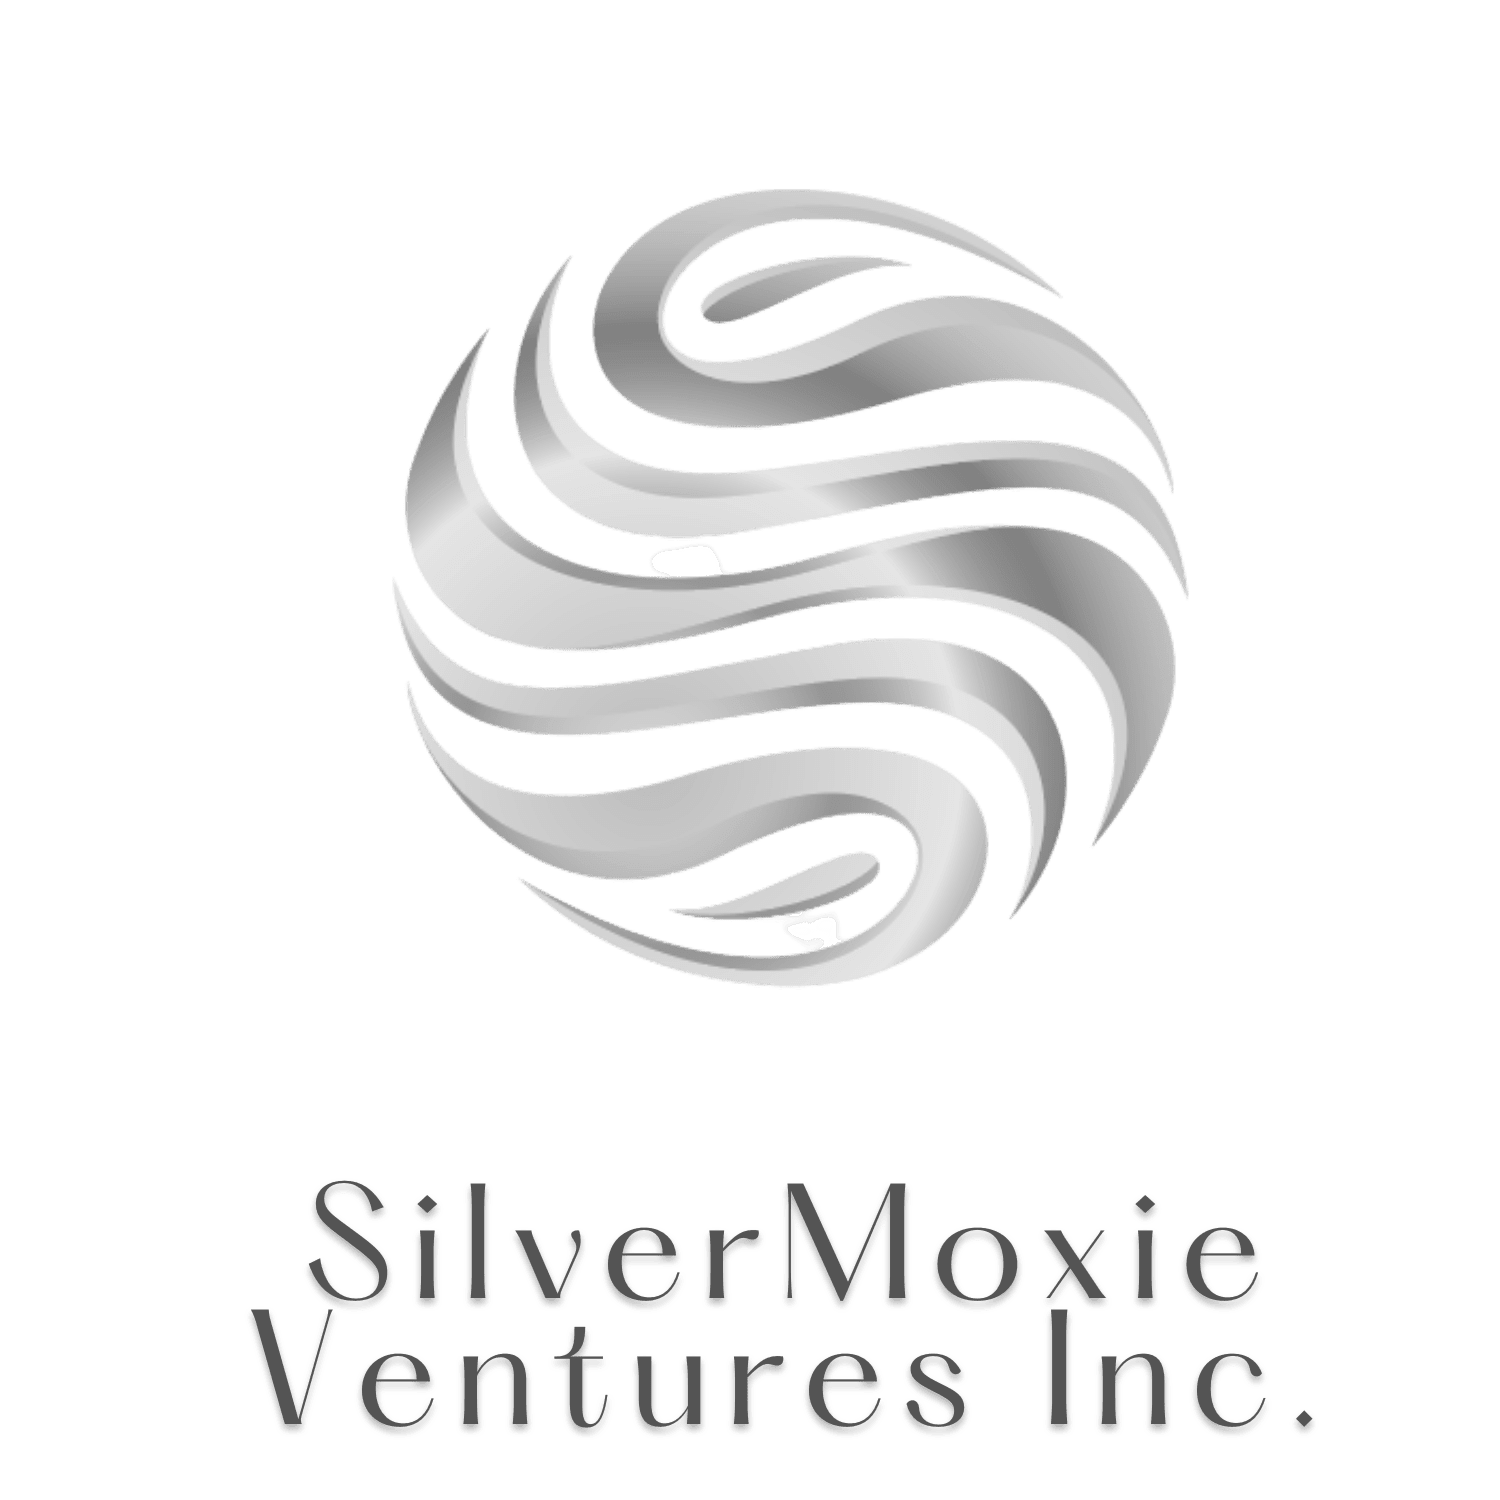 SilverMoxie Ventures Inc